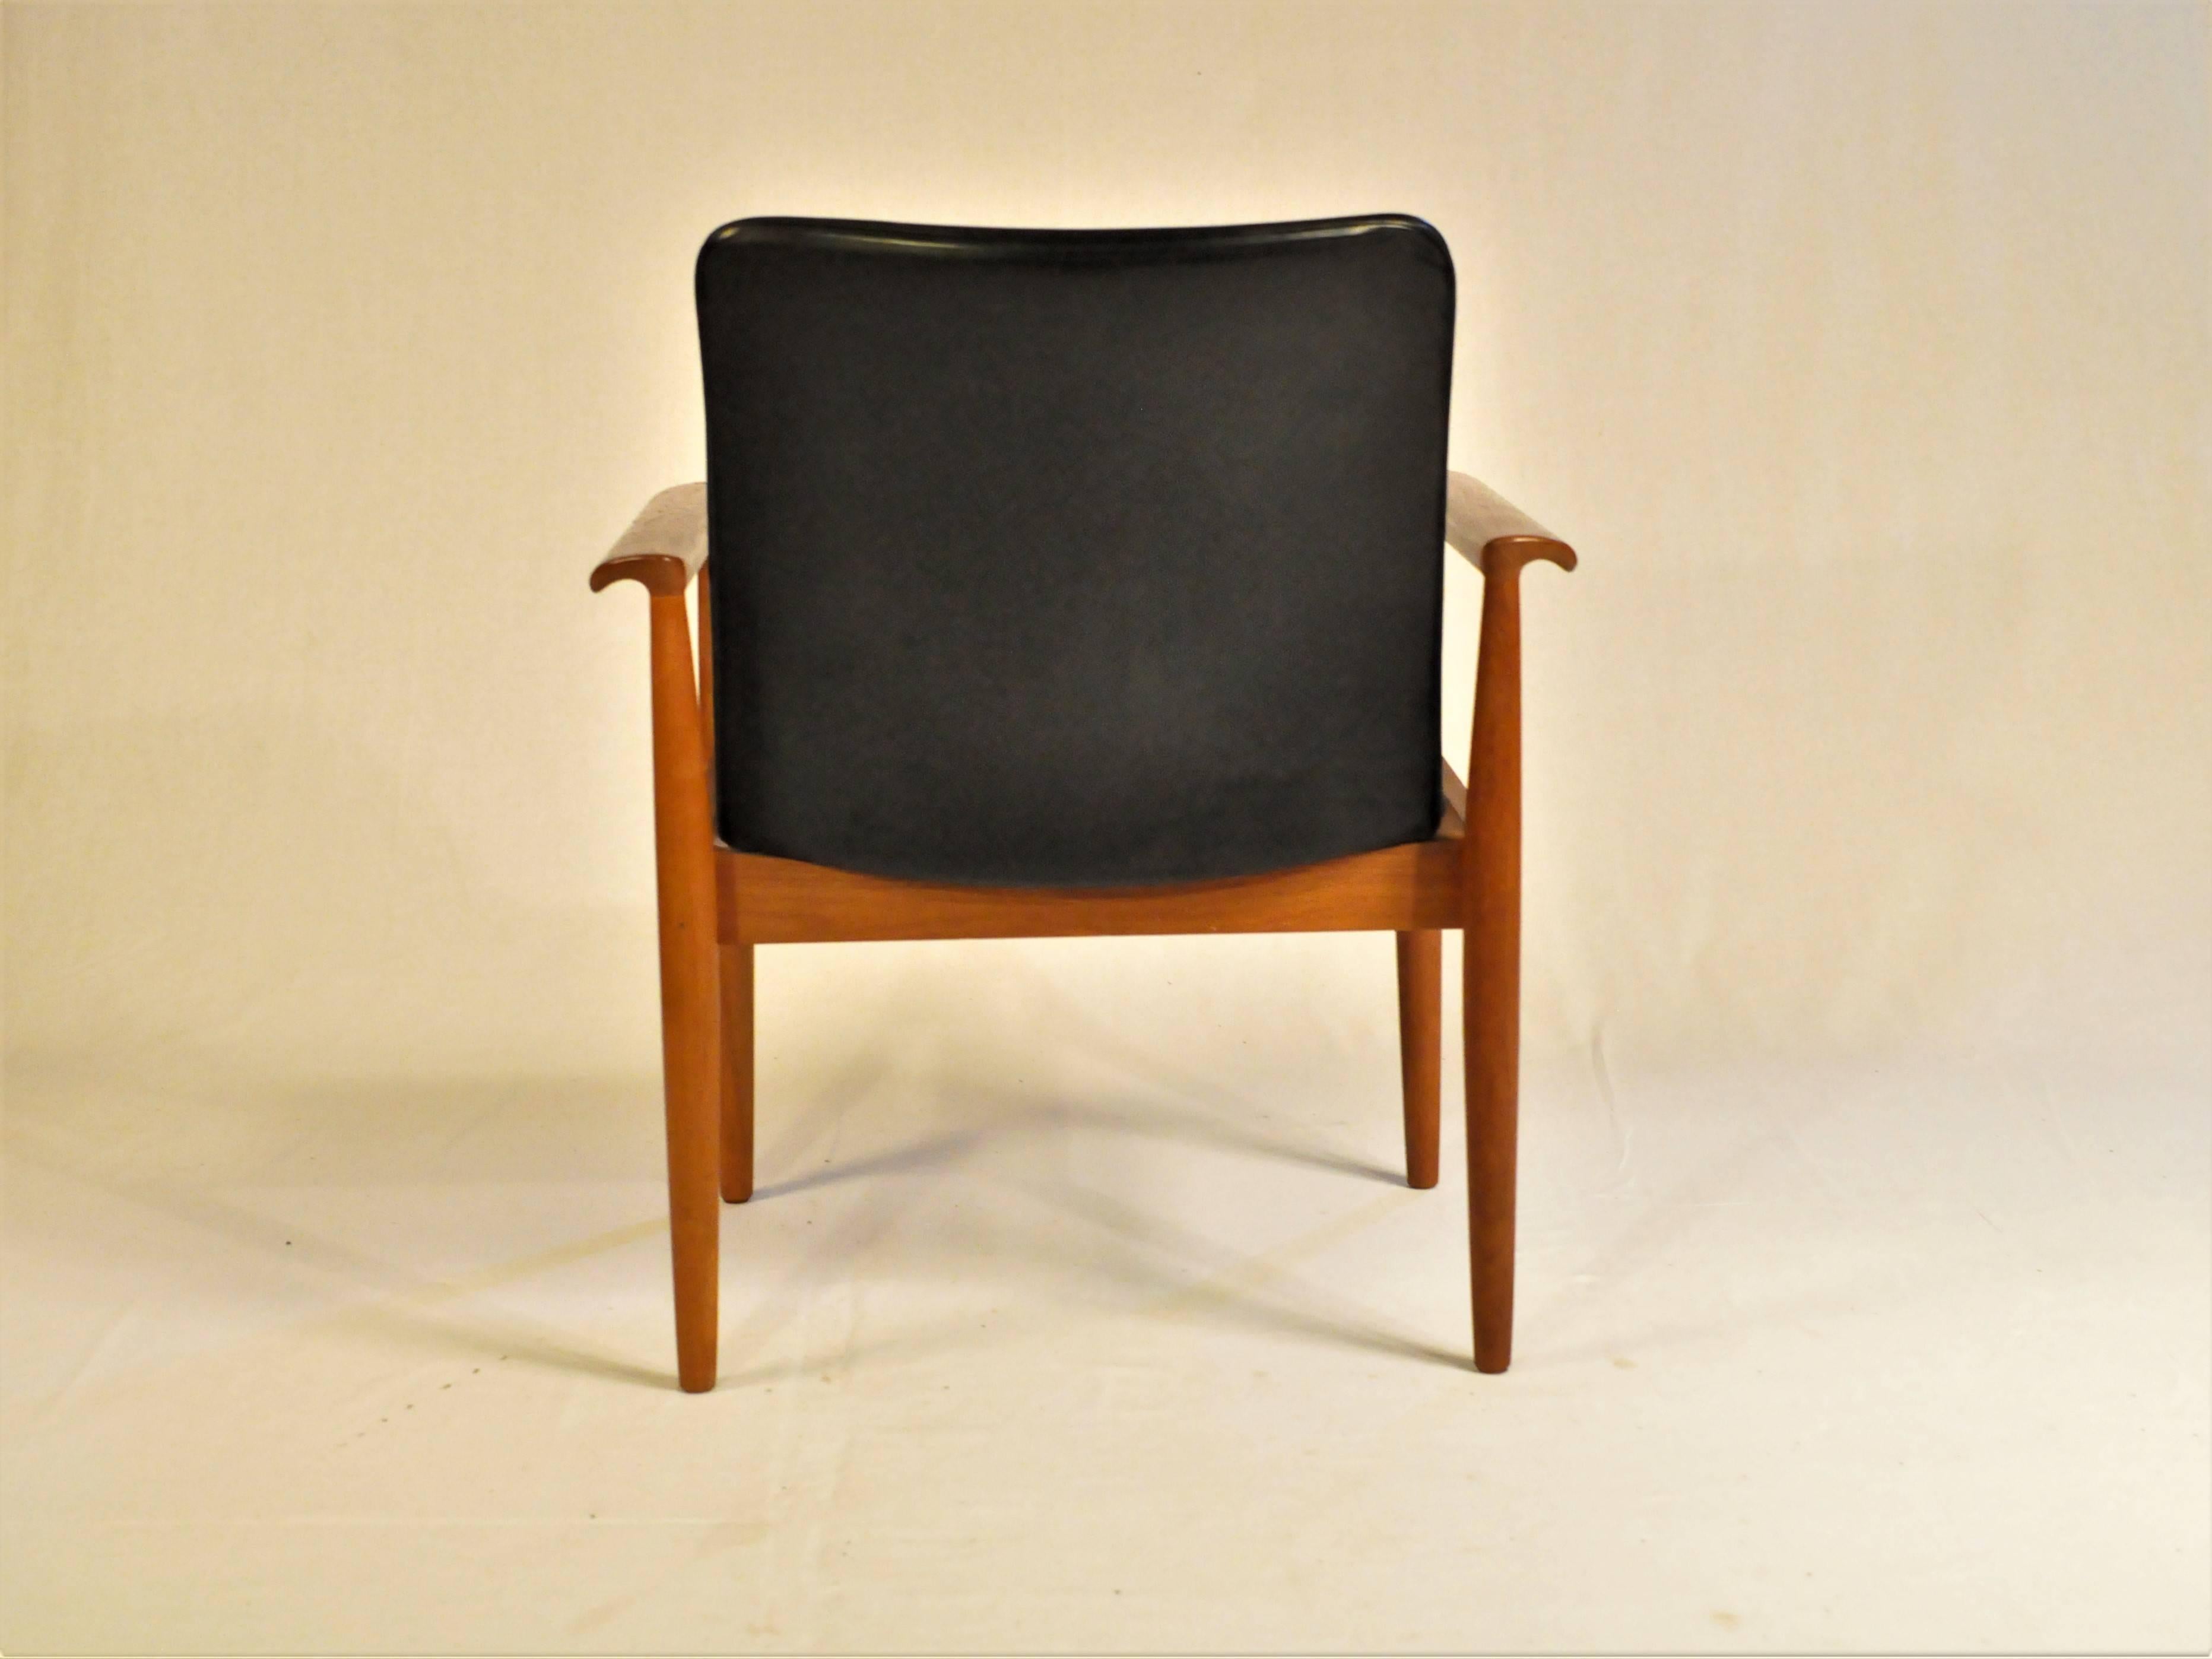 Danish 1960s Finn Juhl Set of Six Model 209 Diplomat Chair in Teak and Leather by Cado